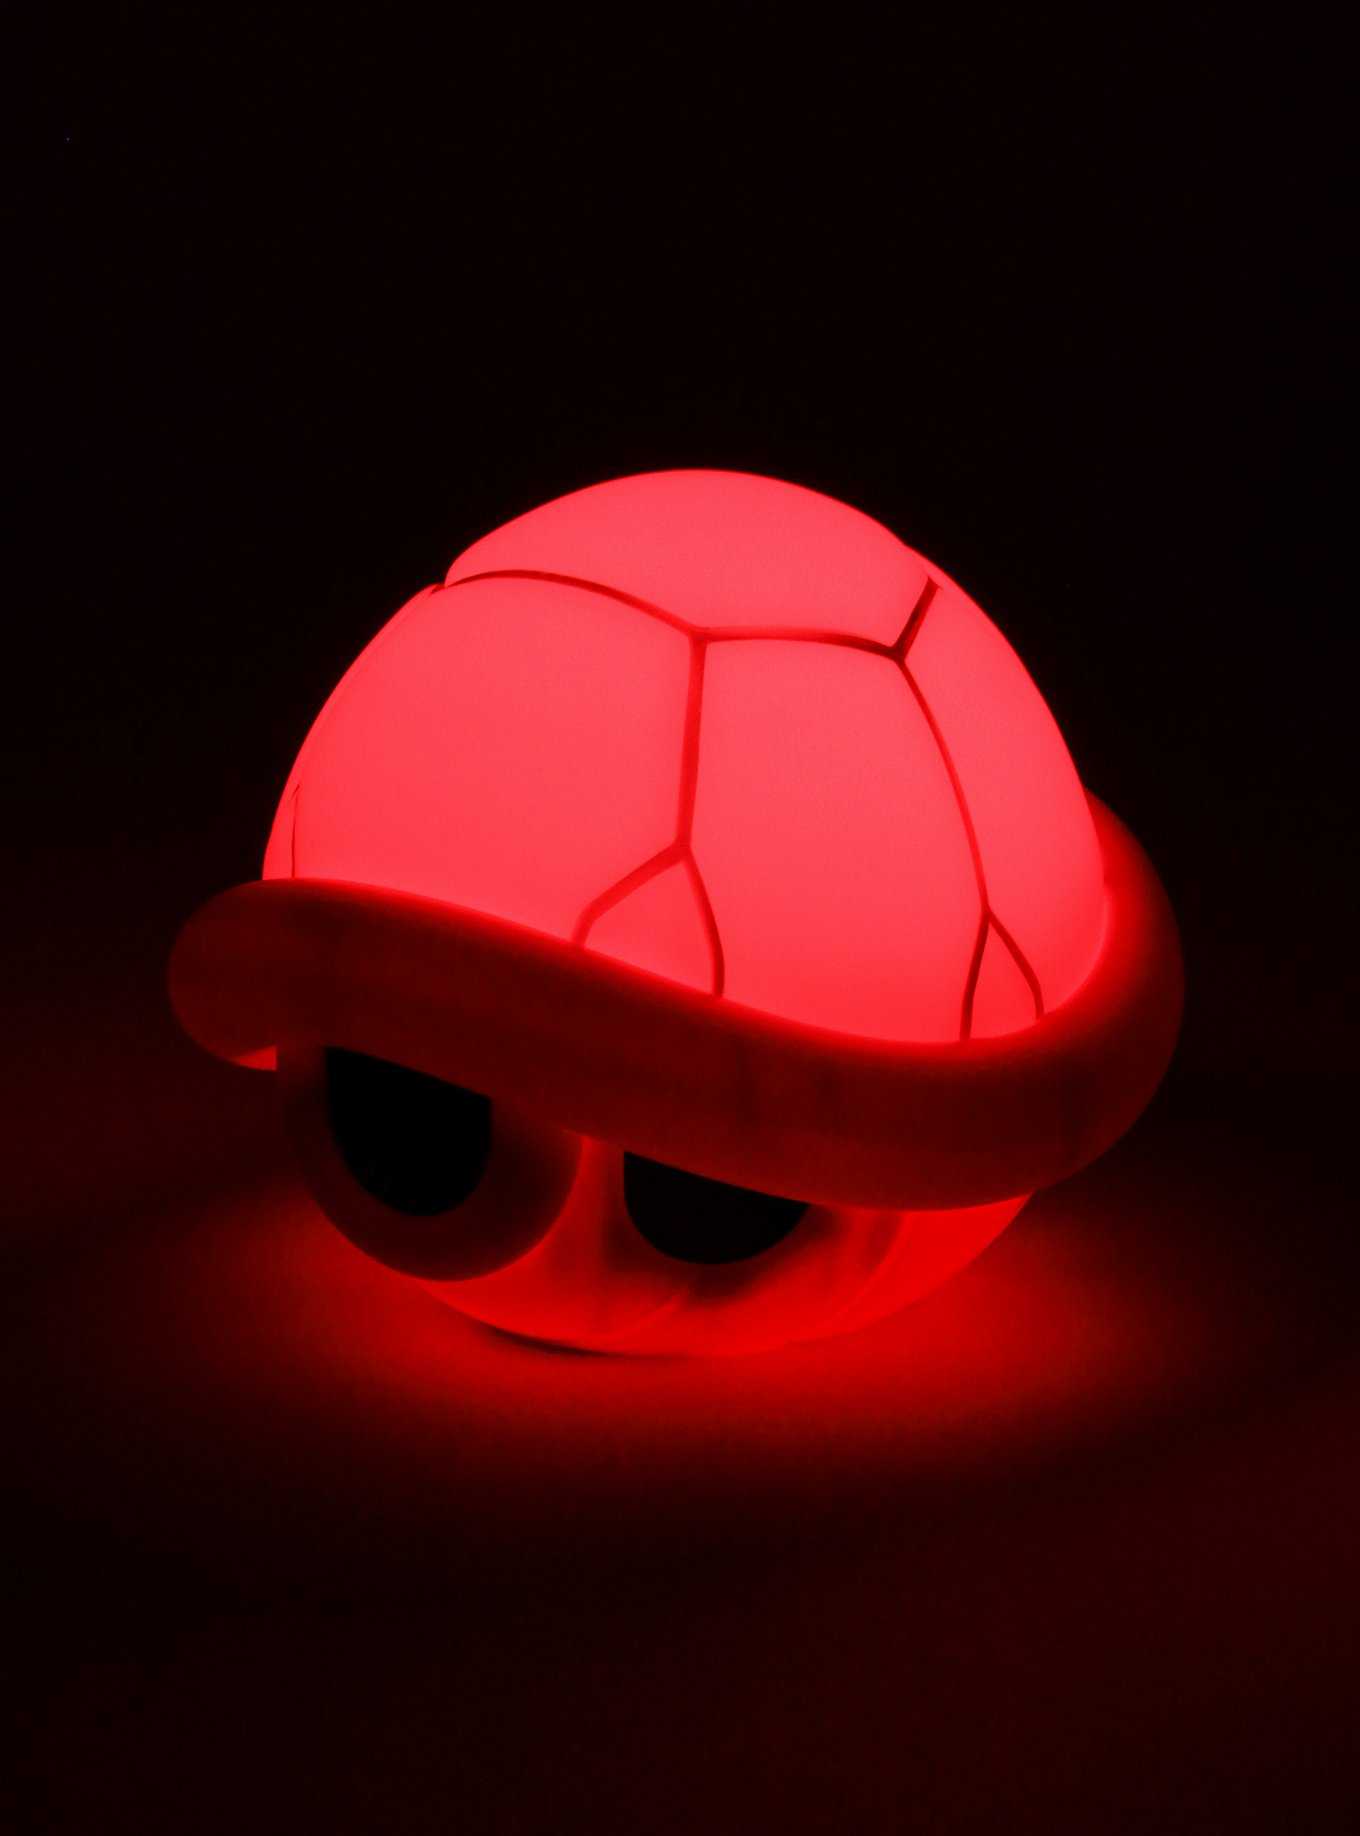 Nintendo Mario Kart Red Shell Figural Mood Light, , hi-res